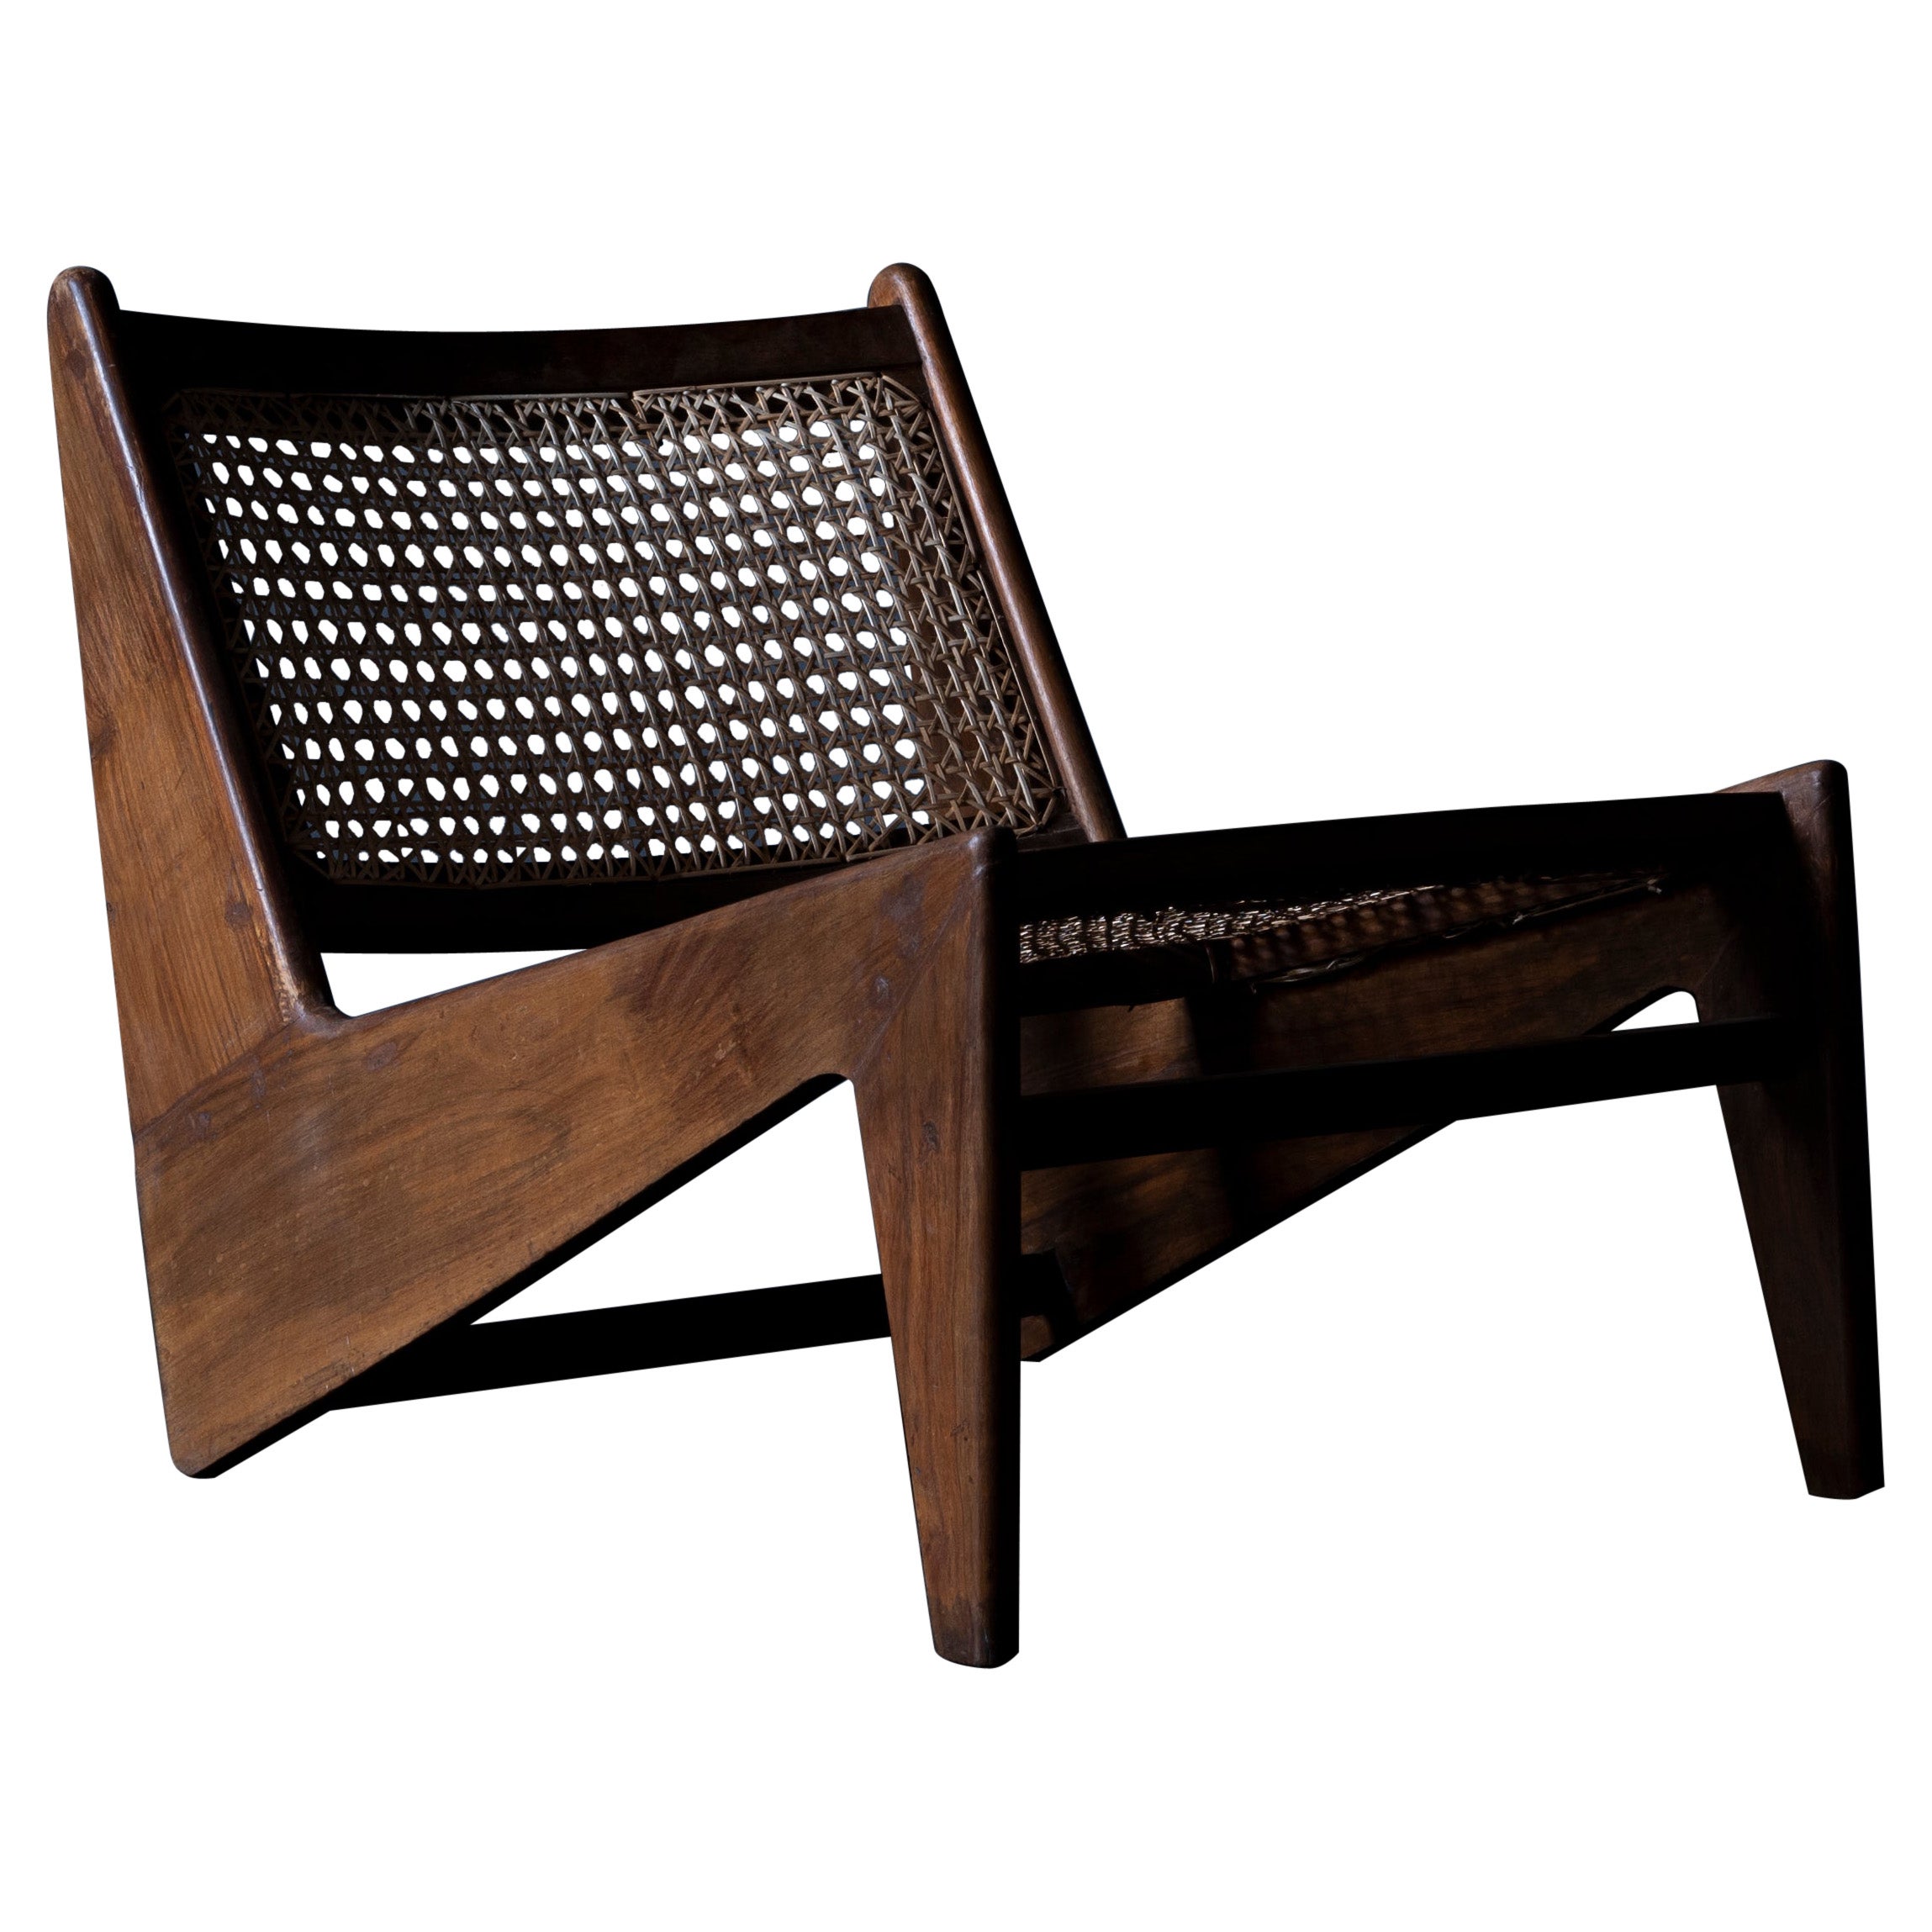 Pierre Jeanneret Kangaroo Chair, Circa 1950s, Chandigarh, India